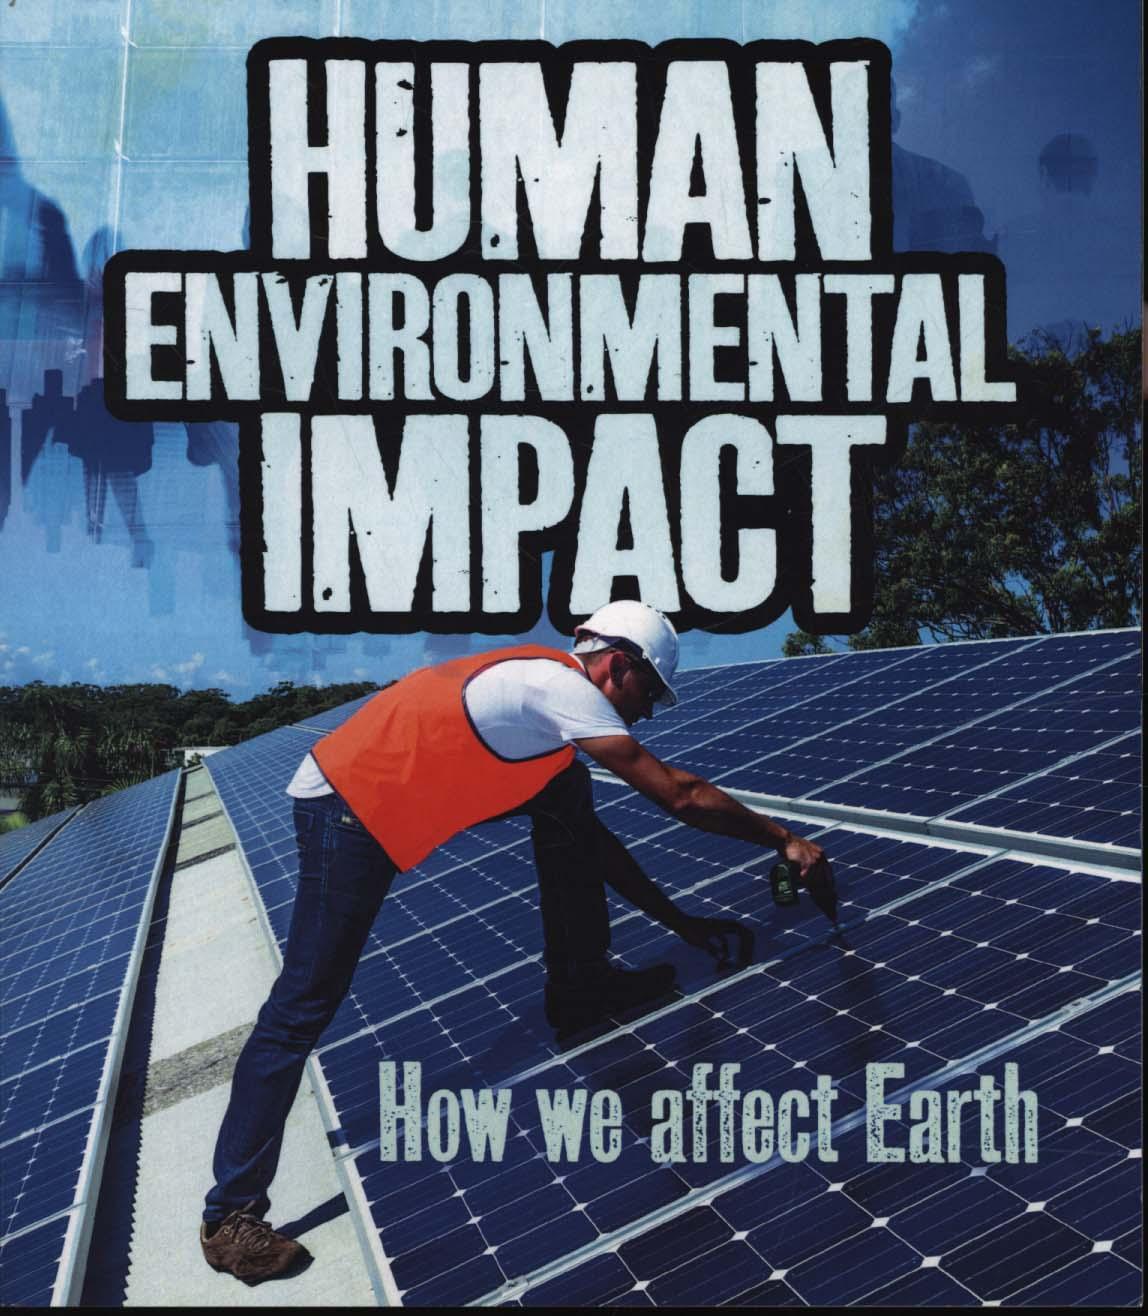 Human Environmental Impact